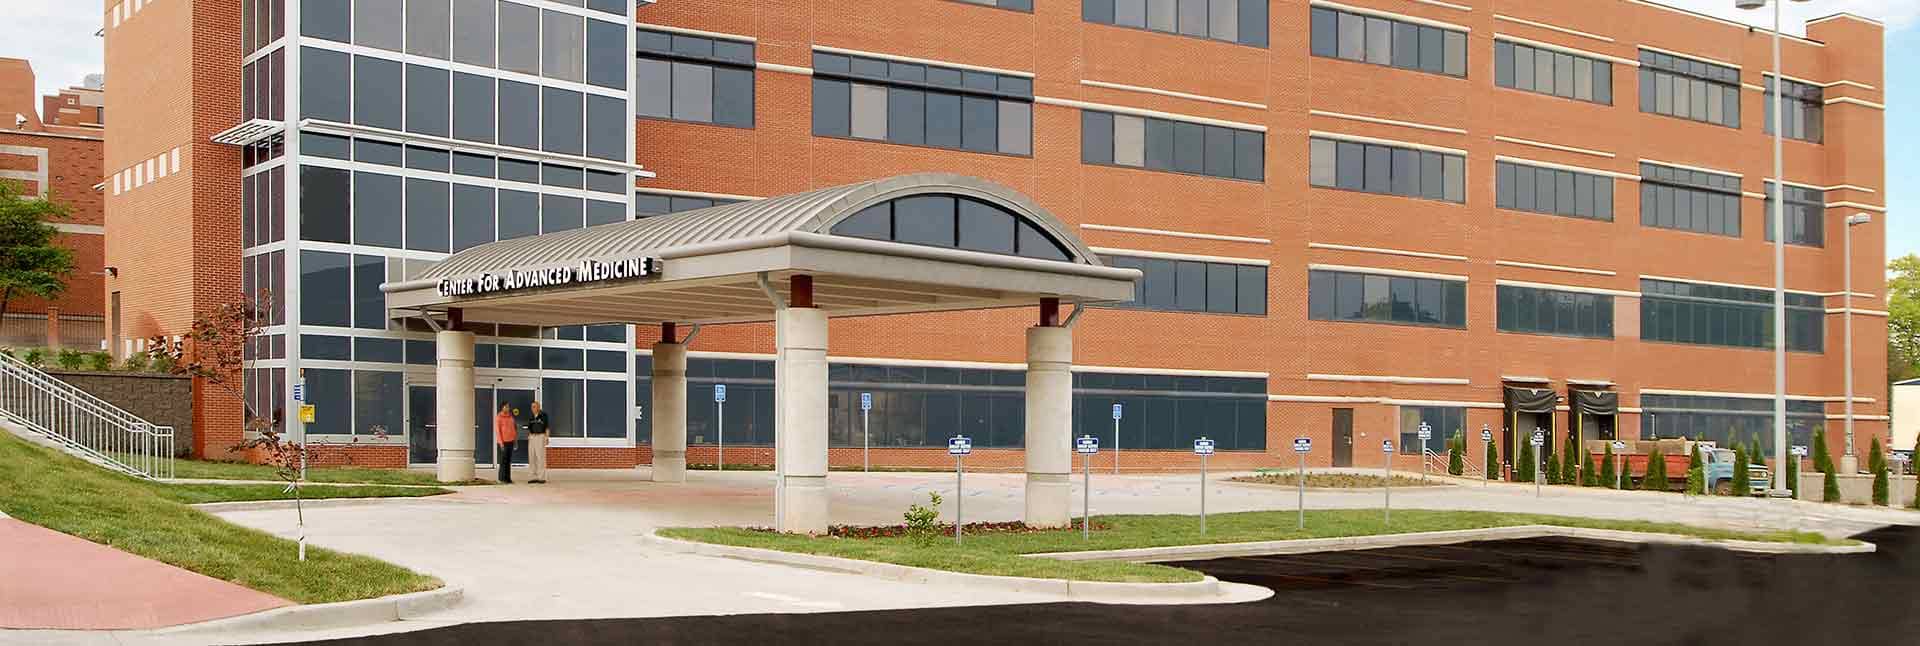 BHC Center for Advanced Medicine, Columbia, Missouri